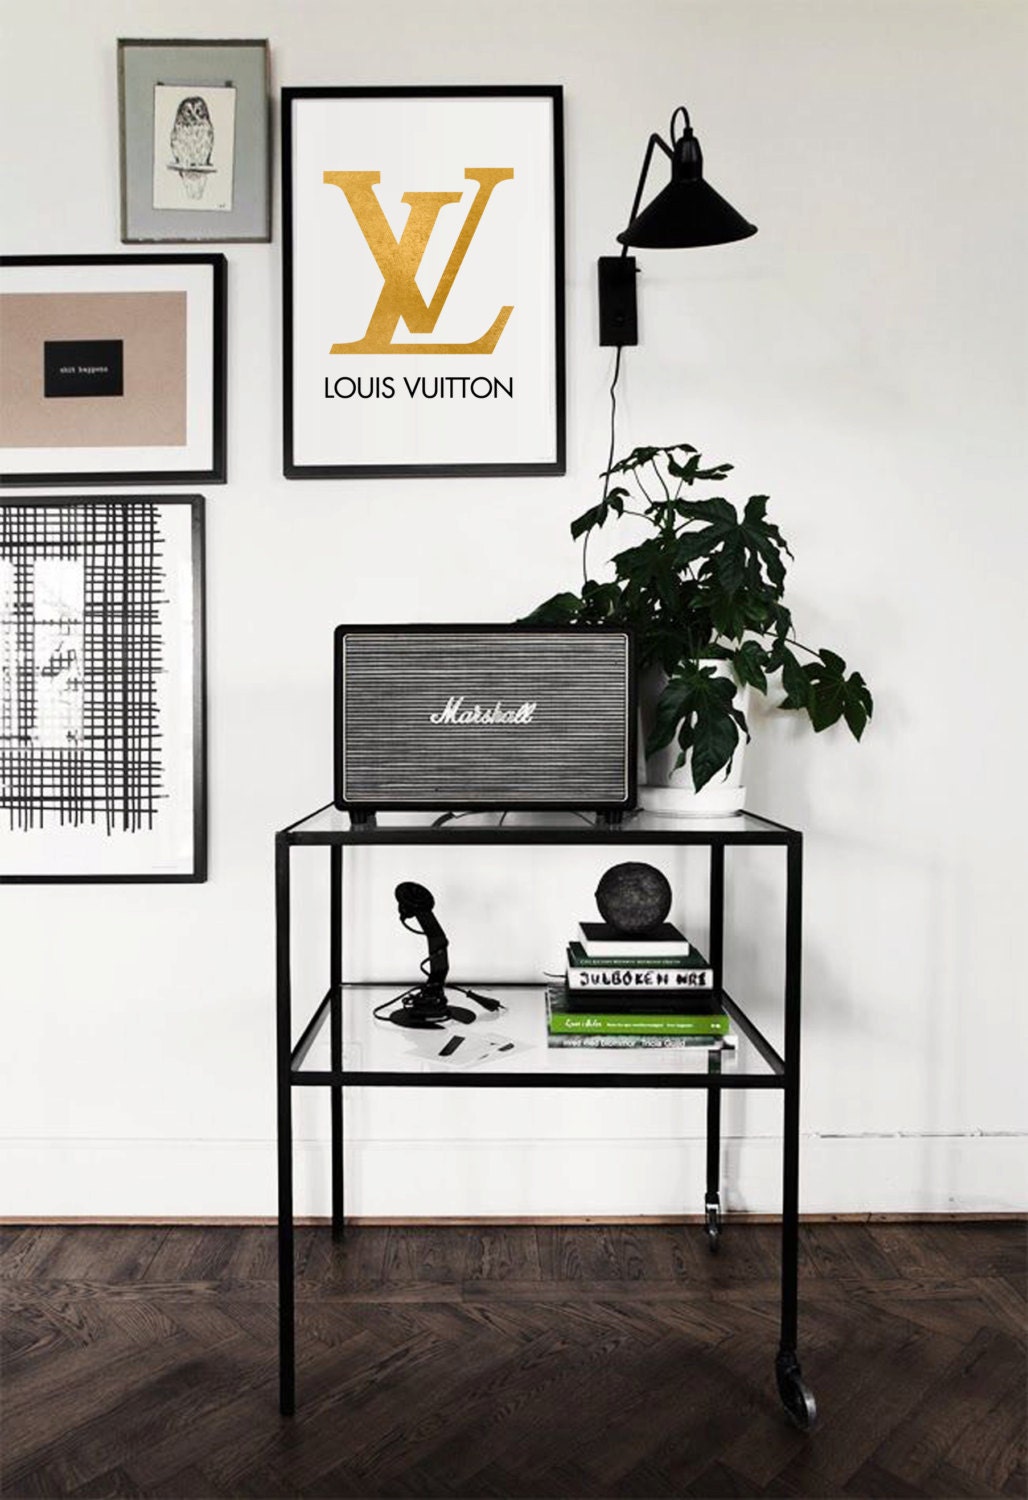 Louis Vuitton Print / Louis Vuitton Decal / by MagictreesDigital